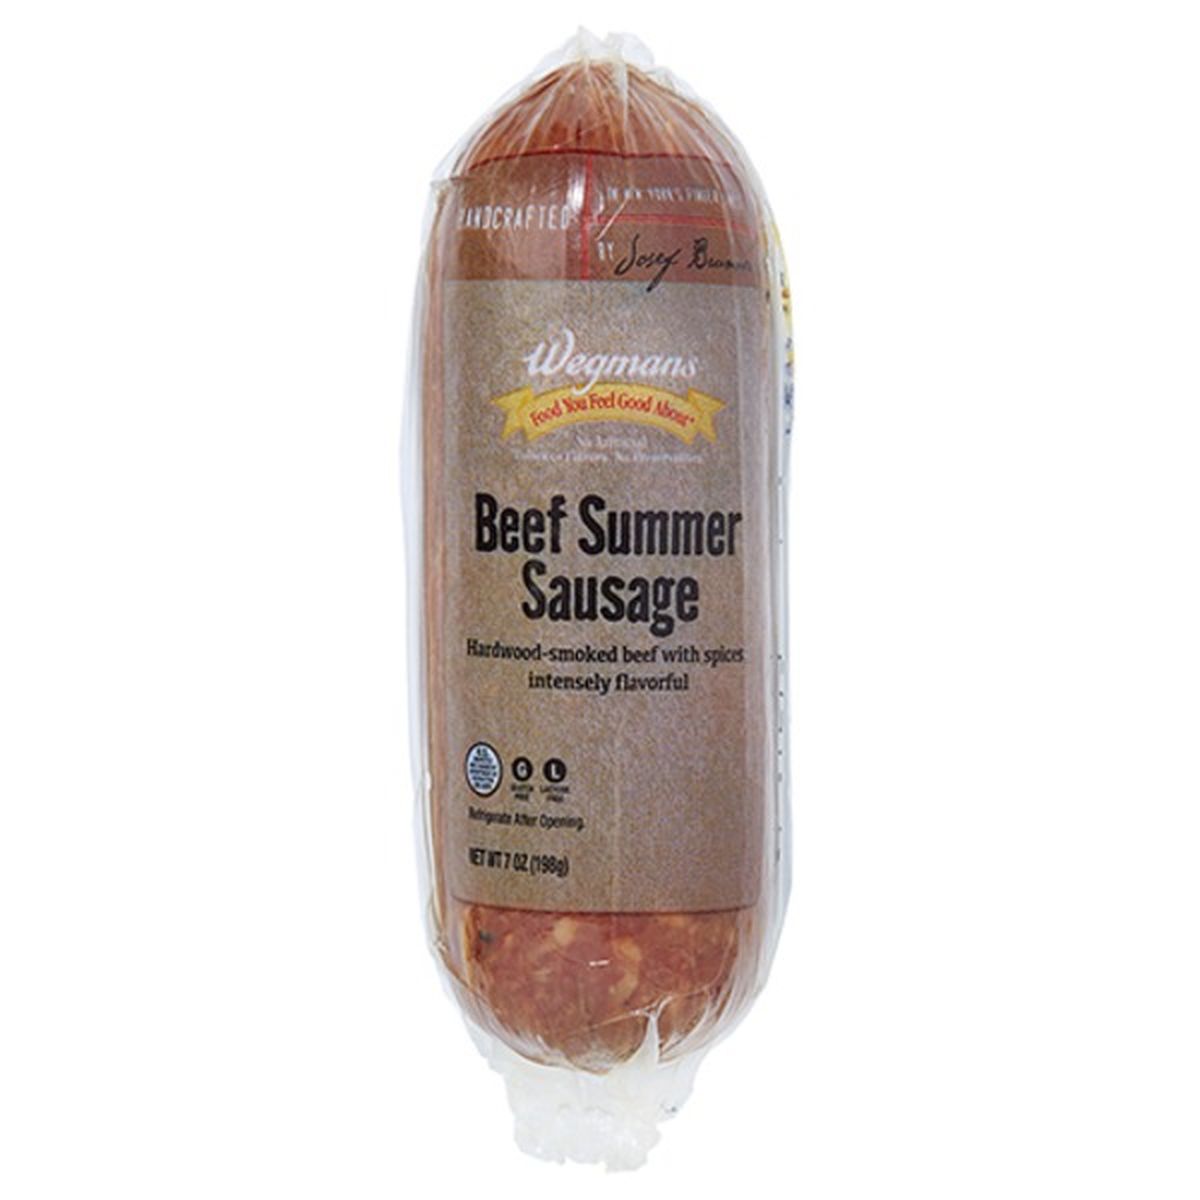 Calories in Wegmans Beef Summer Sausage